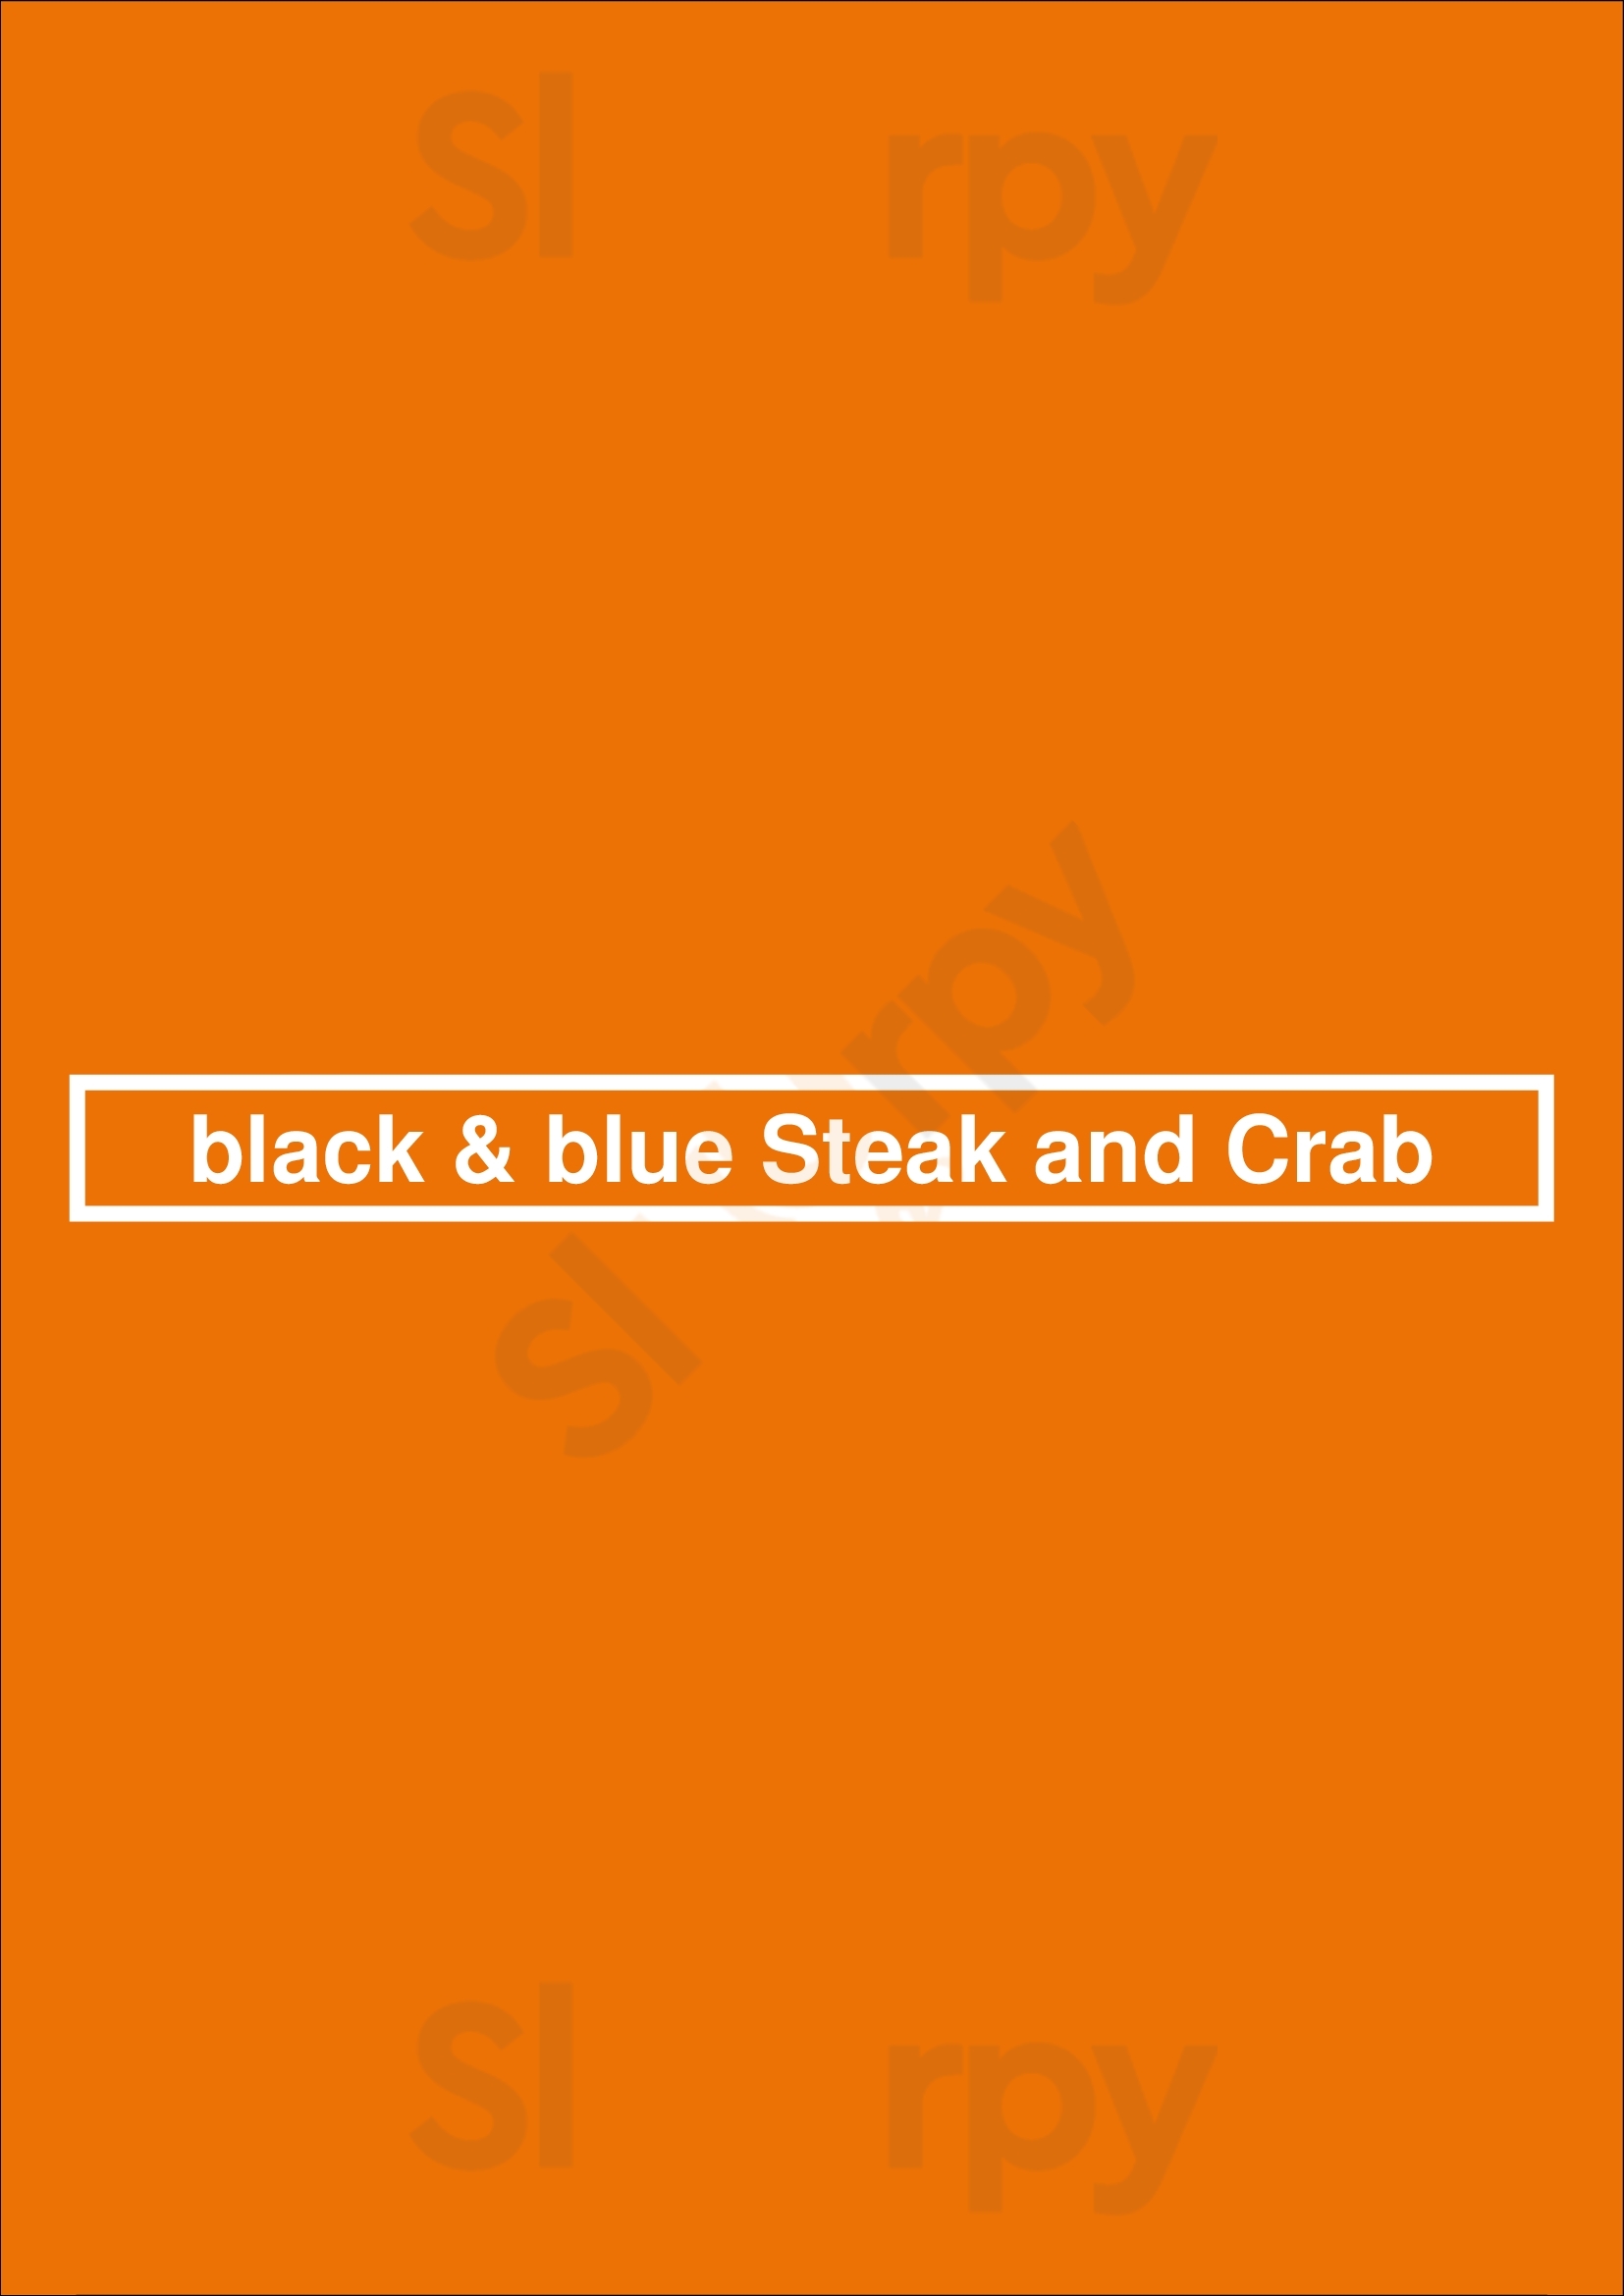 Black & Blue Steak And Crab Albany Menu - 1